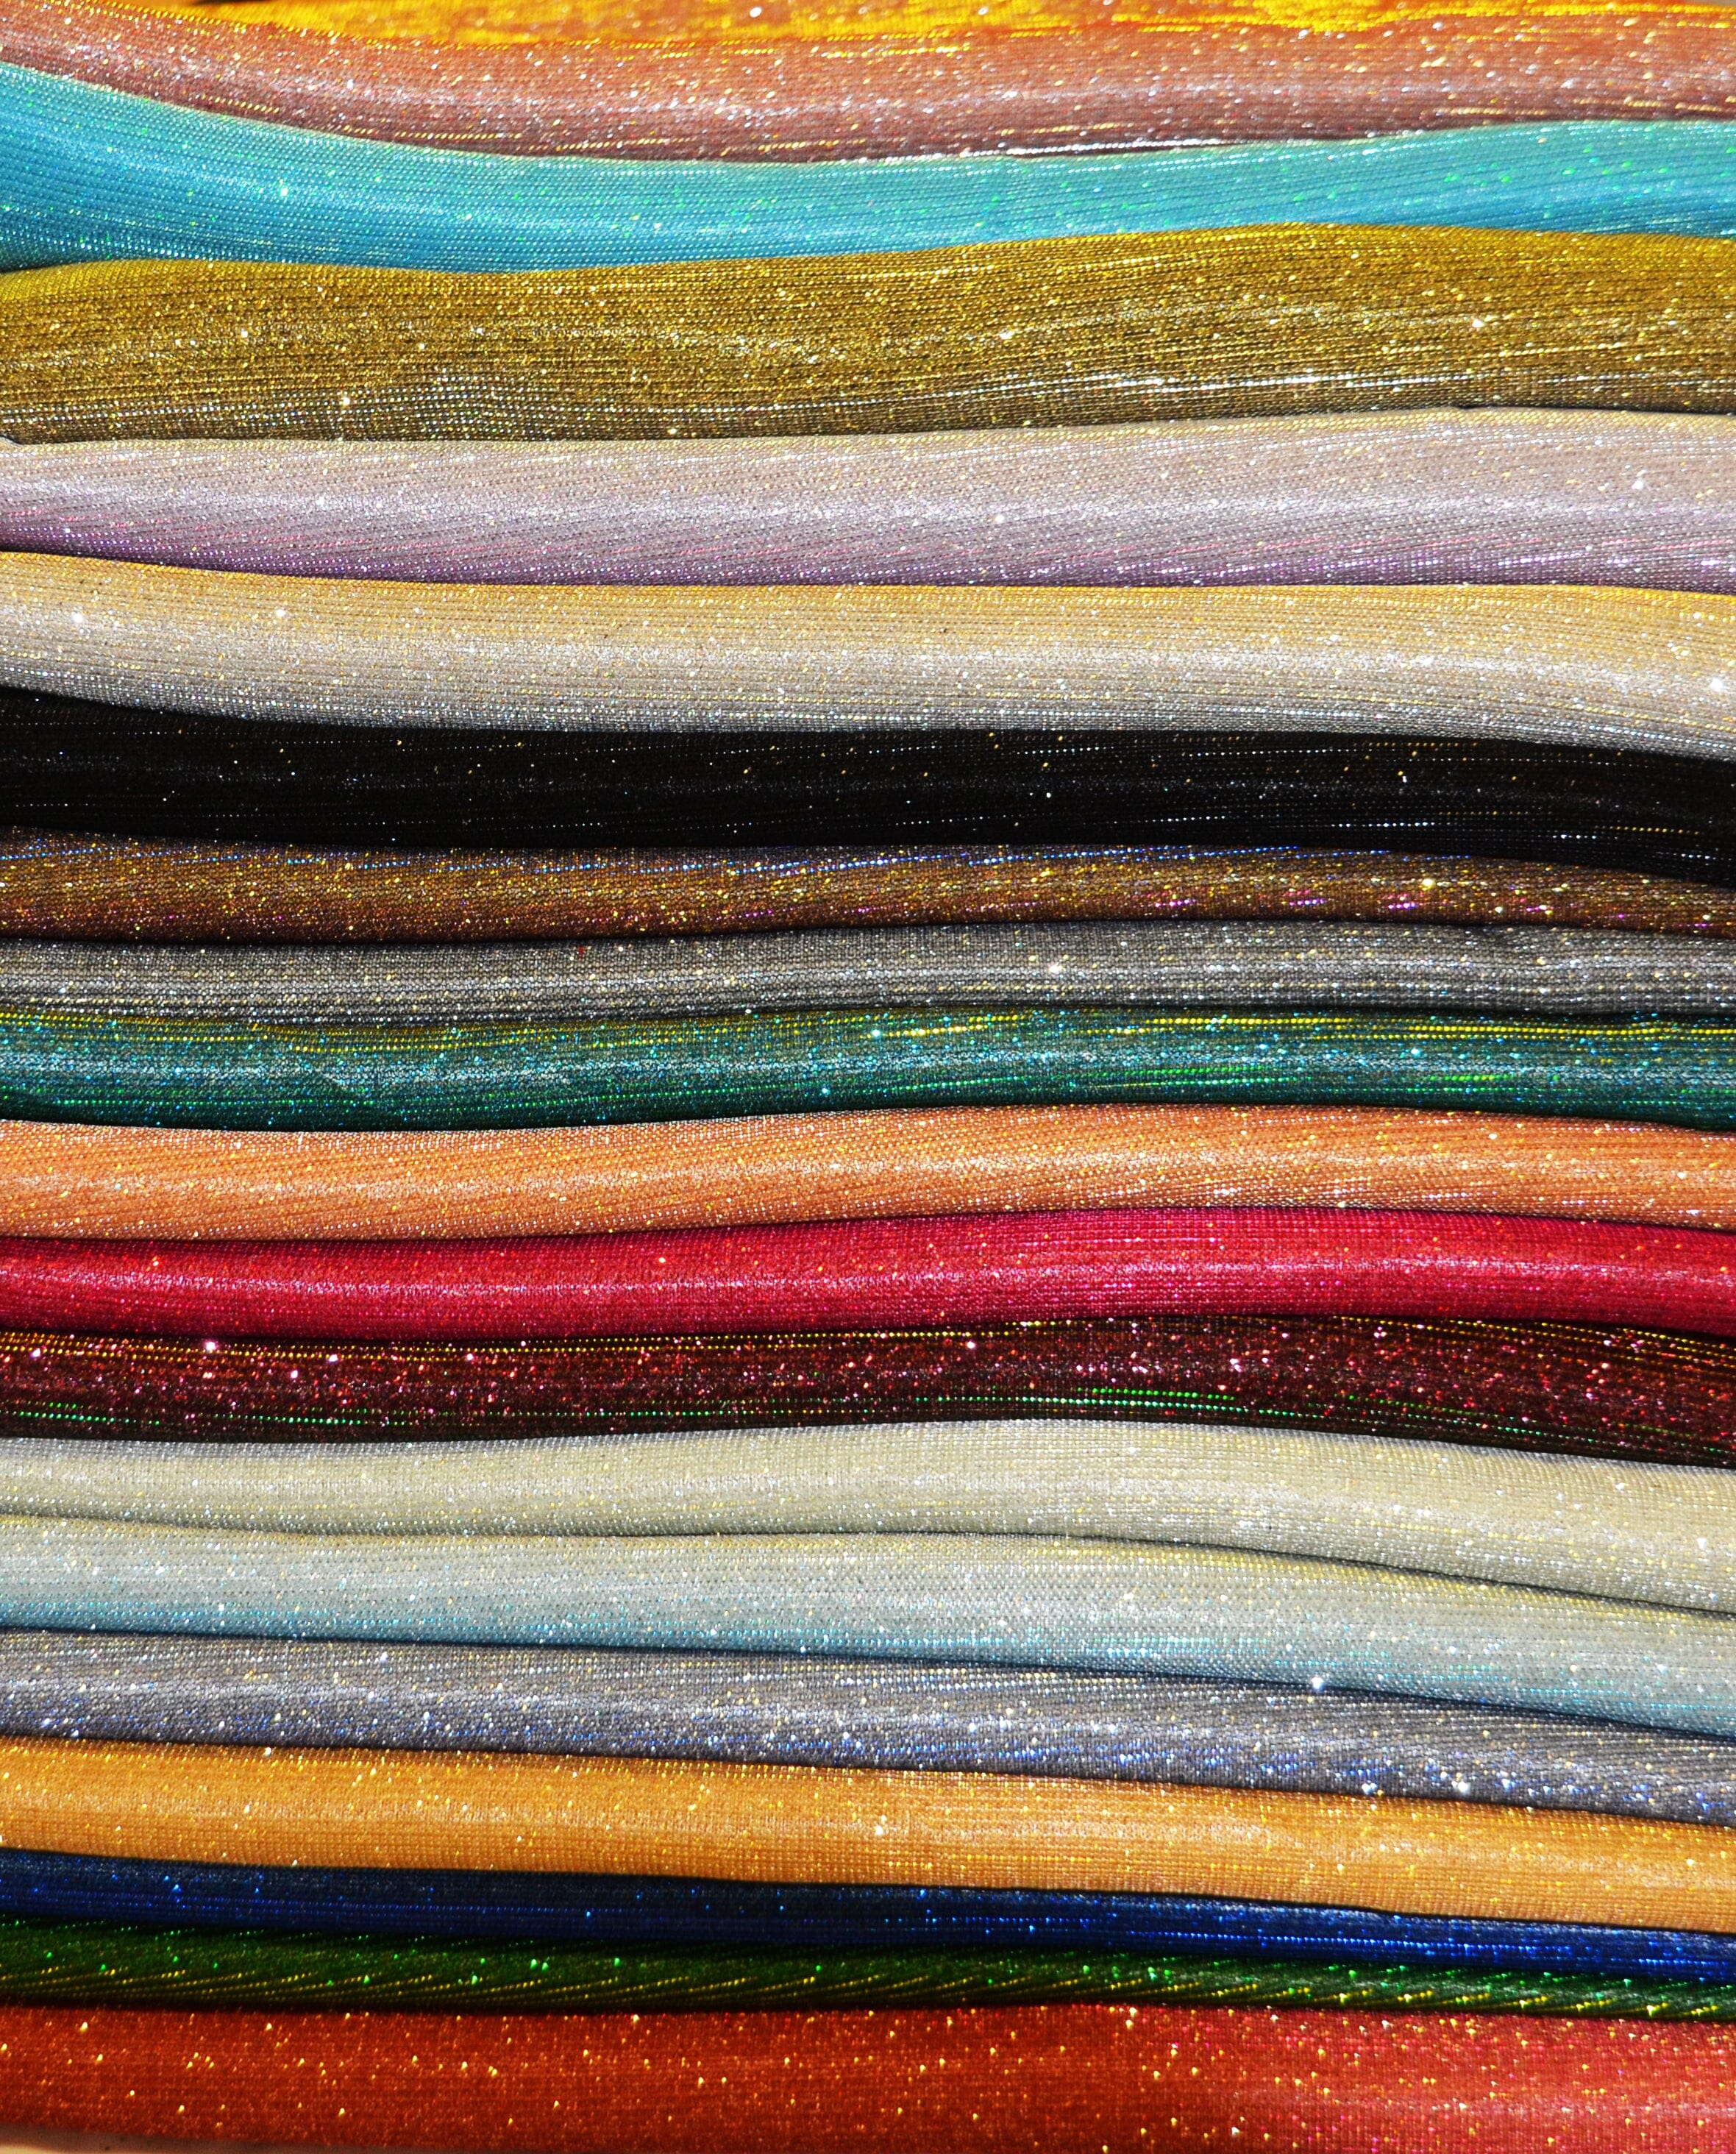 Silver Dry-Flex Space Dye Poly Lycra Jersey Knit Fabric – The